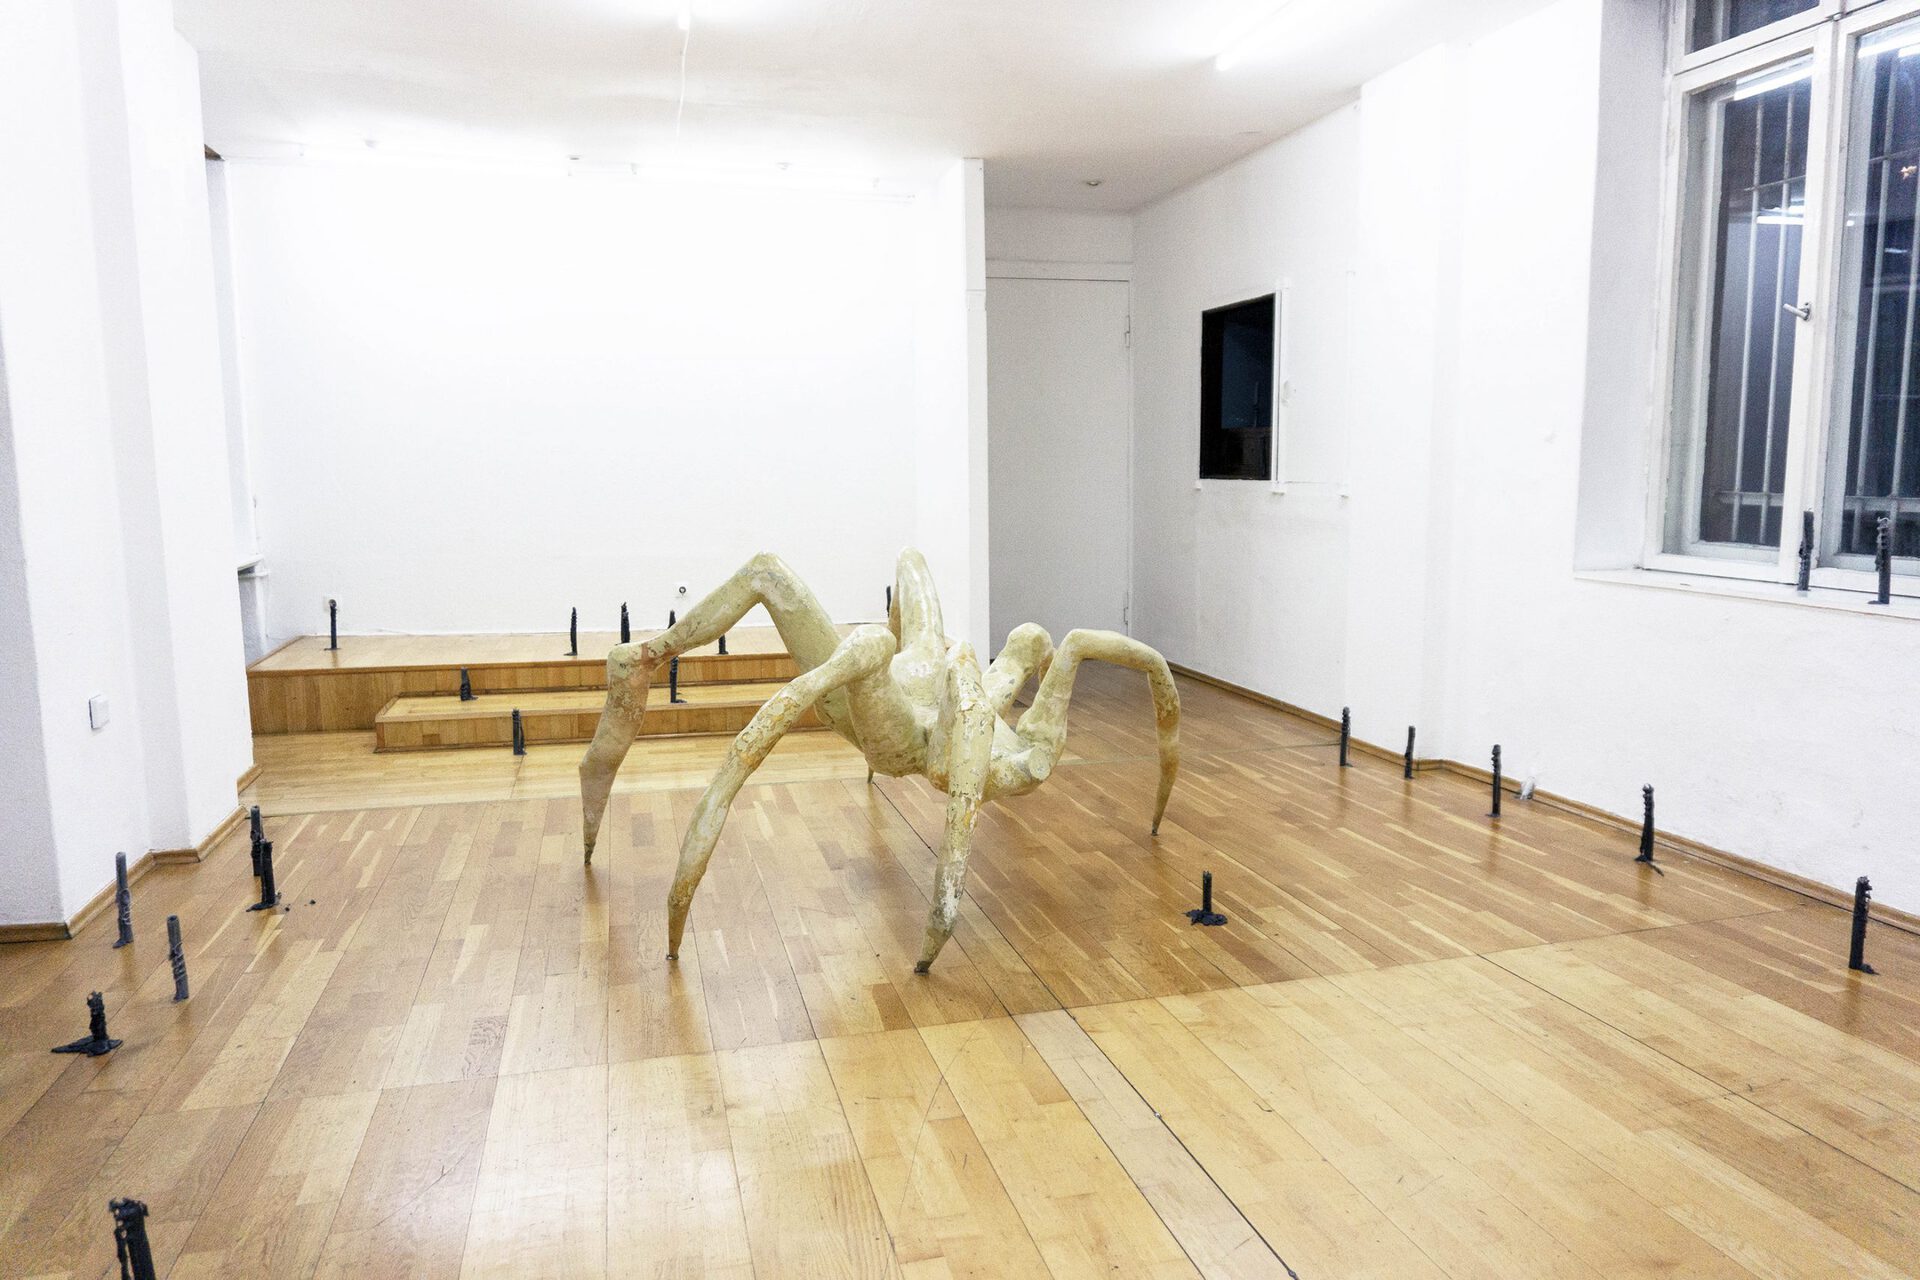 Sandra Moral, Metamorphosis I, 2019, Fiberglass- polyester resin, polyurethane foam, car lacquerfoam, 100 x 180 x 160 cm